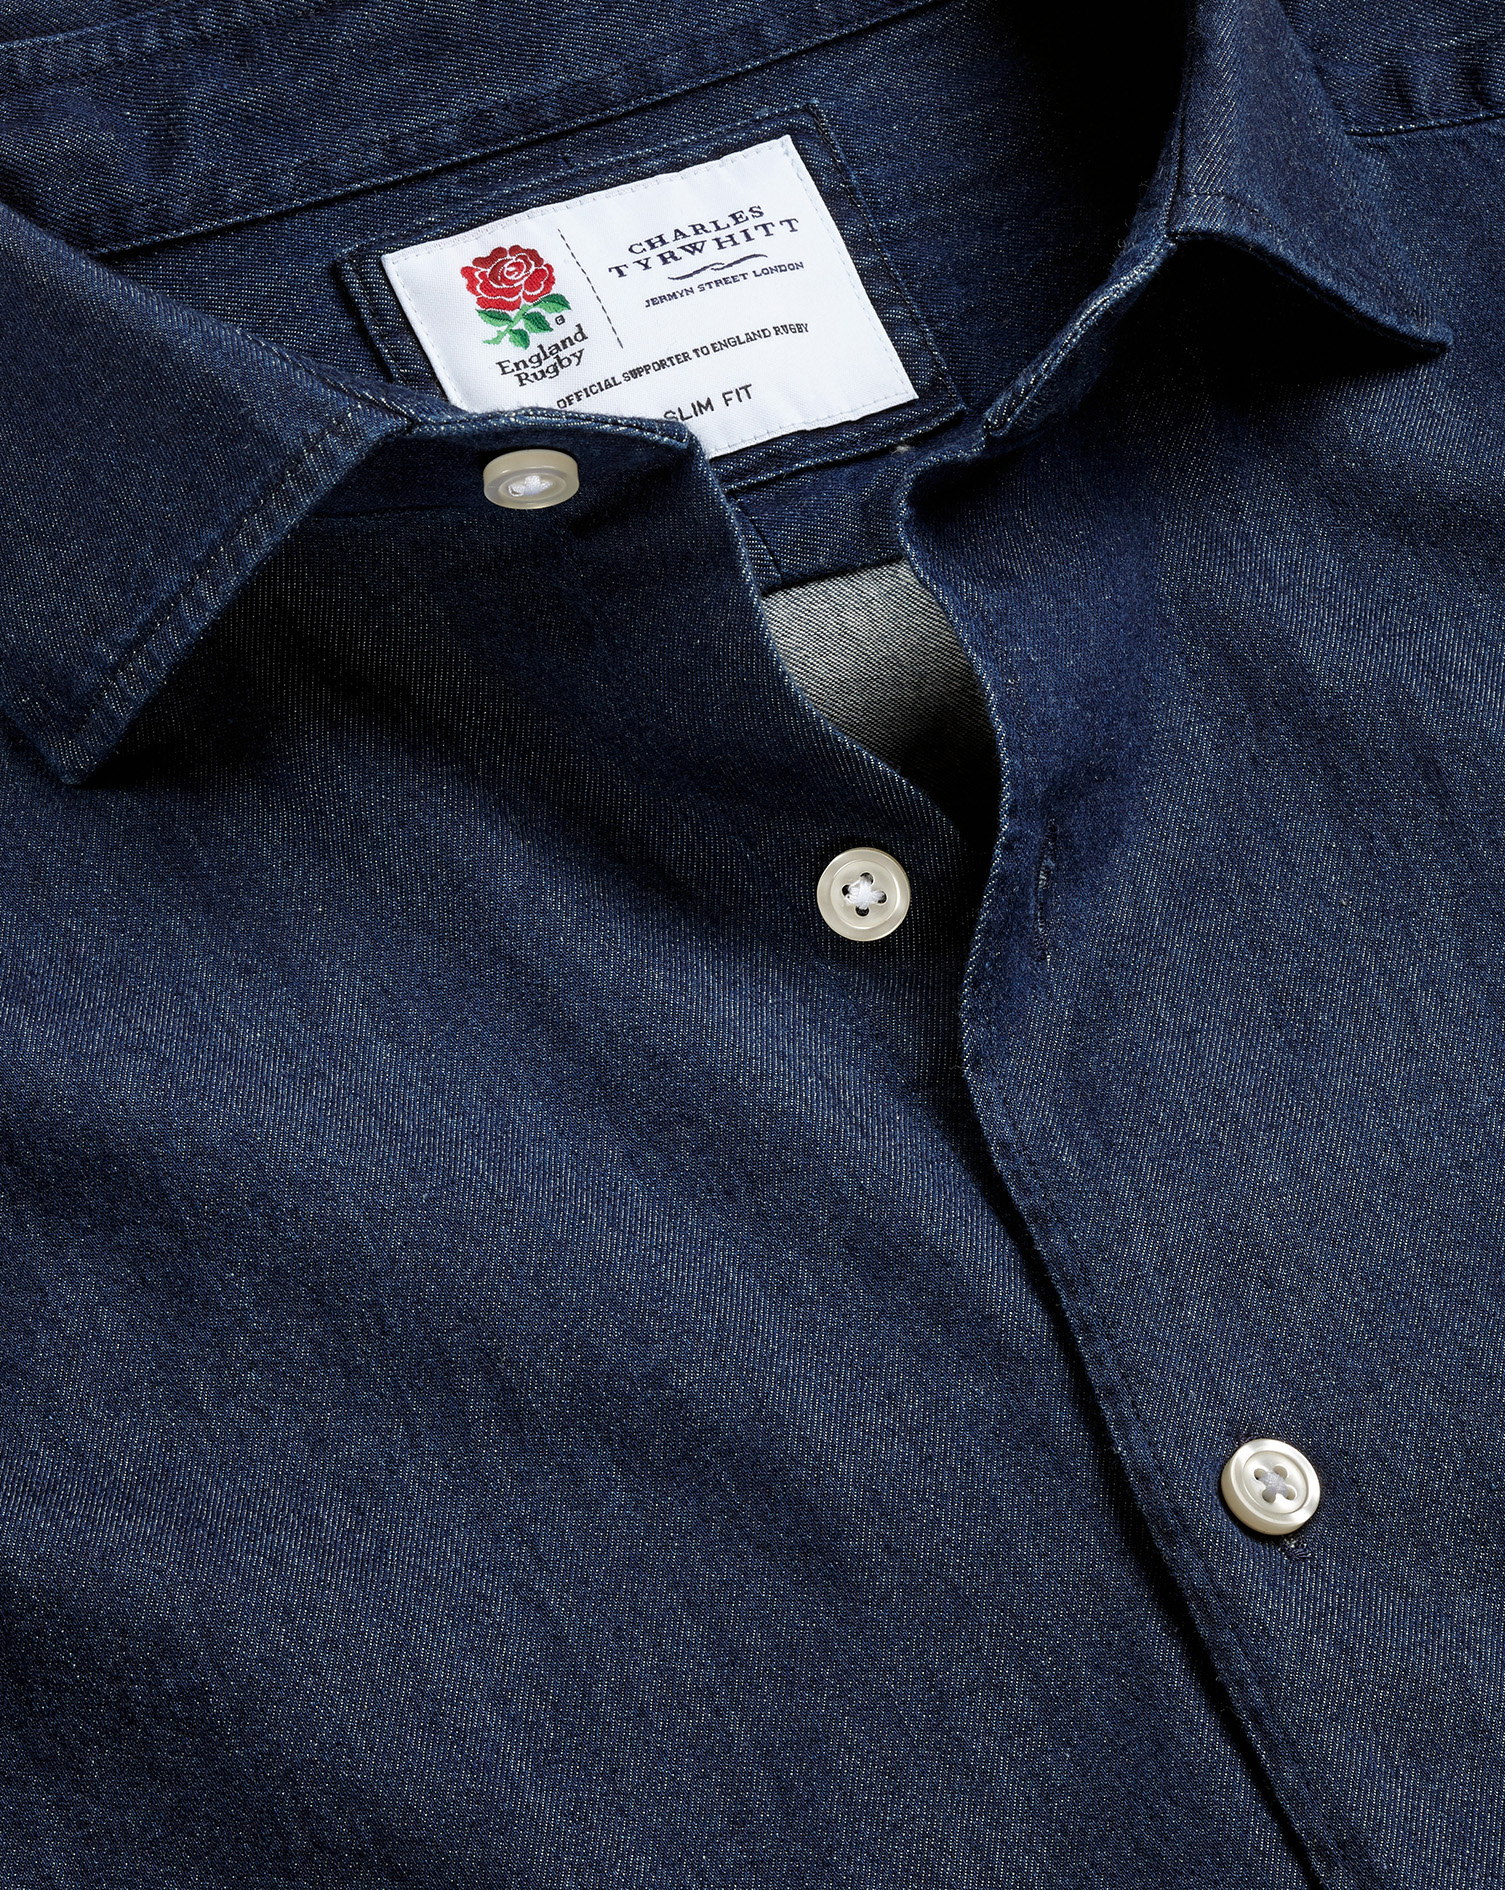 Men's Charles Tyrwhitt England Rugby Denim Shirt - Denim Blue Single Cuff Size Medium Cotton
